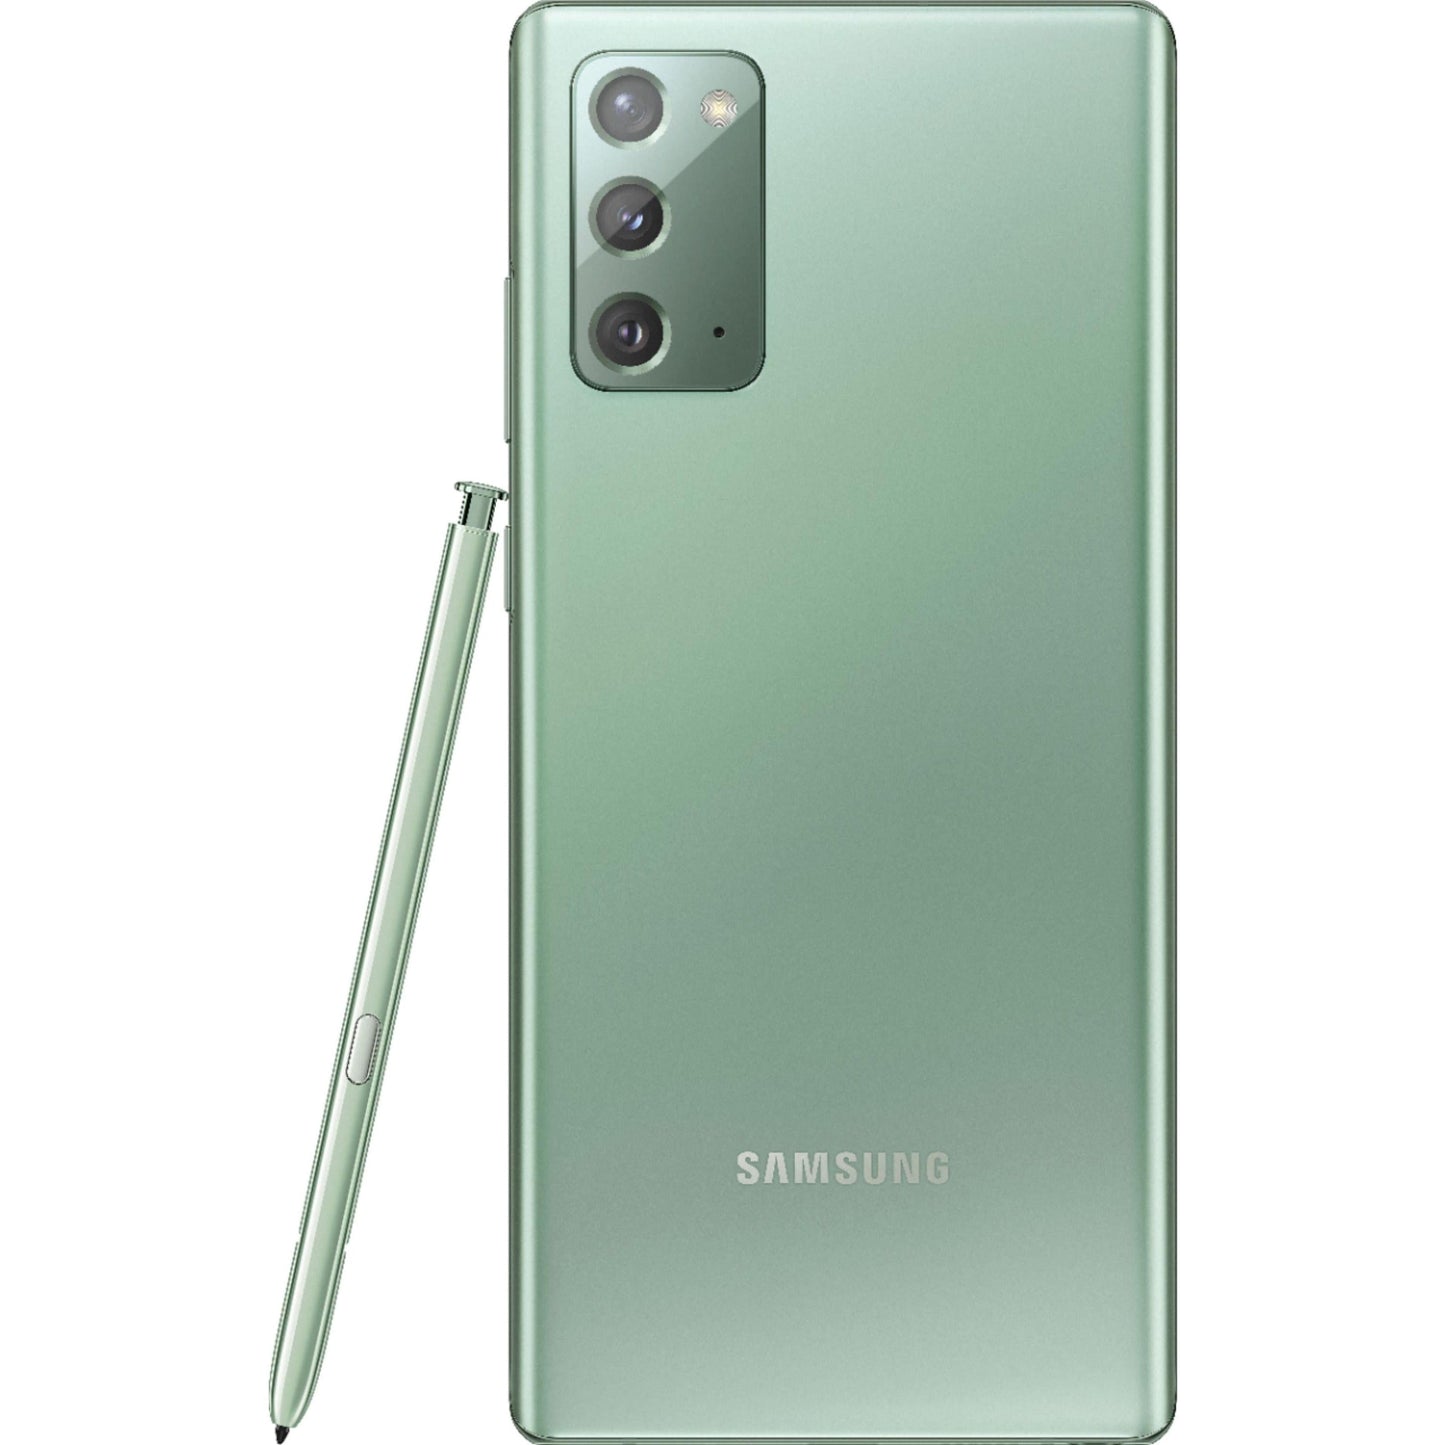 Samsung Galaxy Note20 5G - 128 GB - Mystic Green - Unlocked